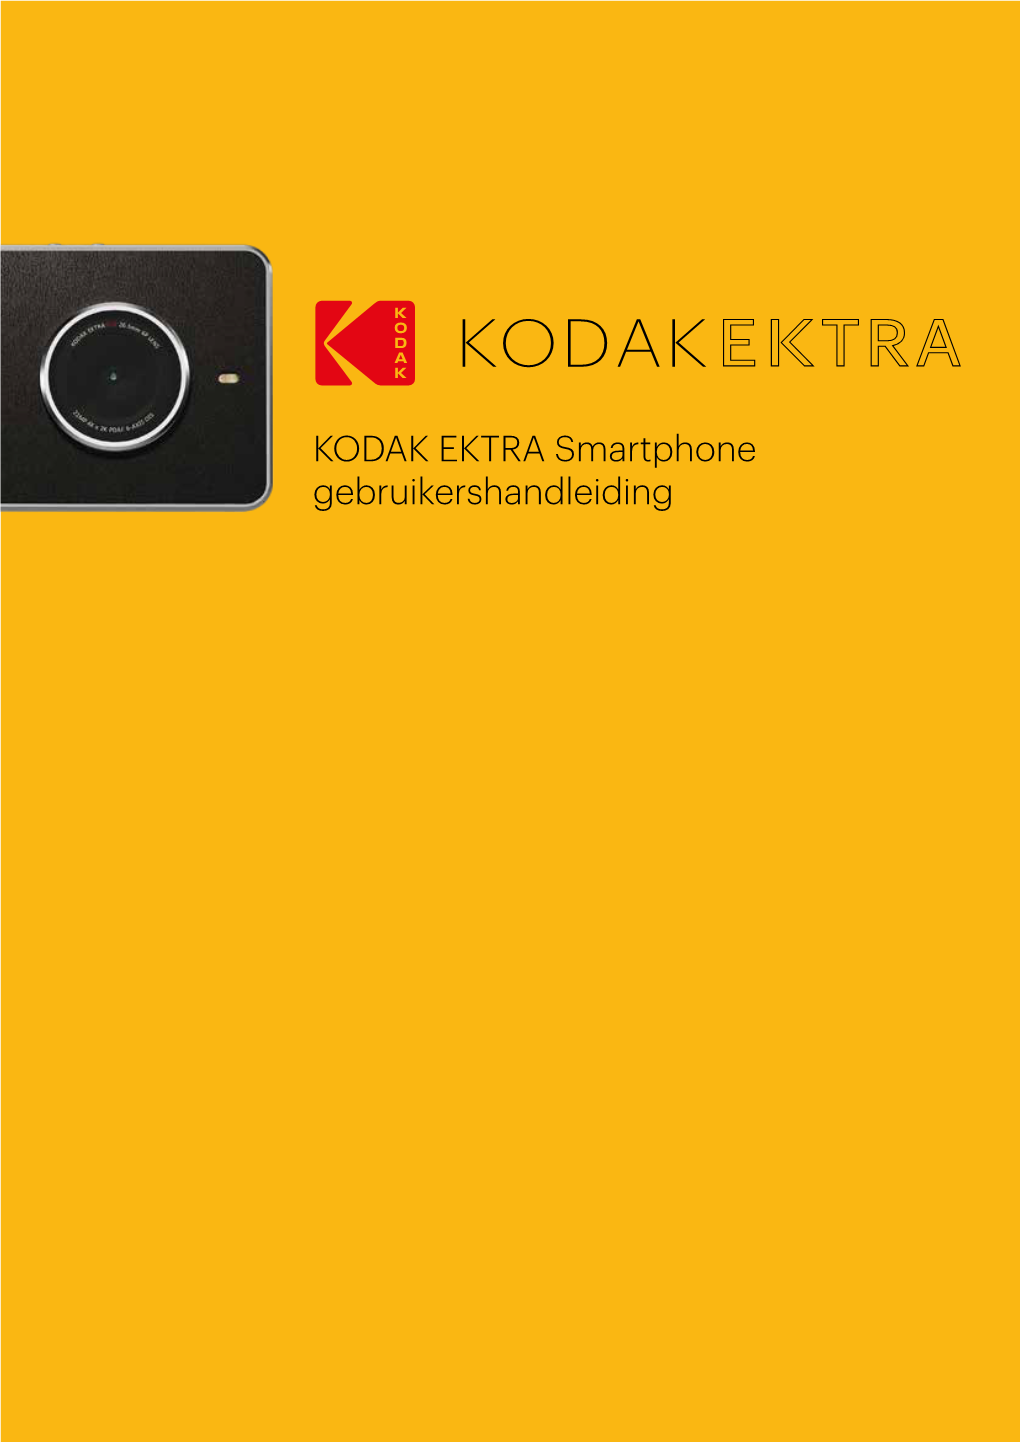 KODAK EKTRA Smartphone Gebruikershandleiding